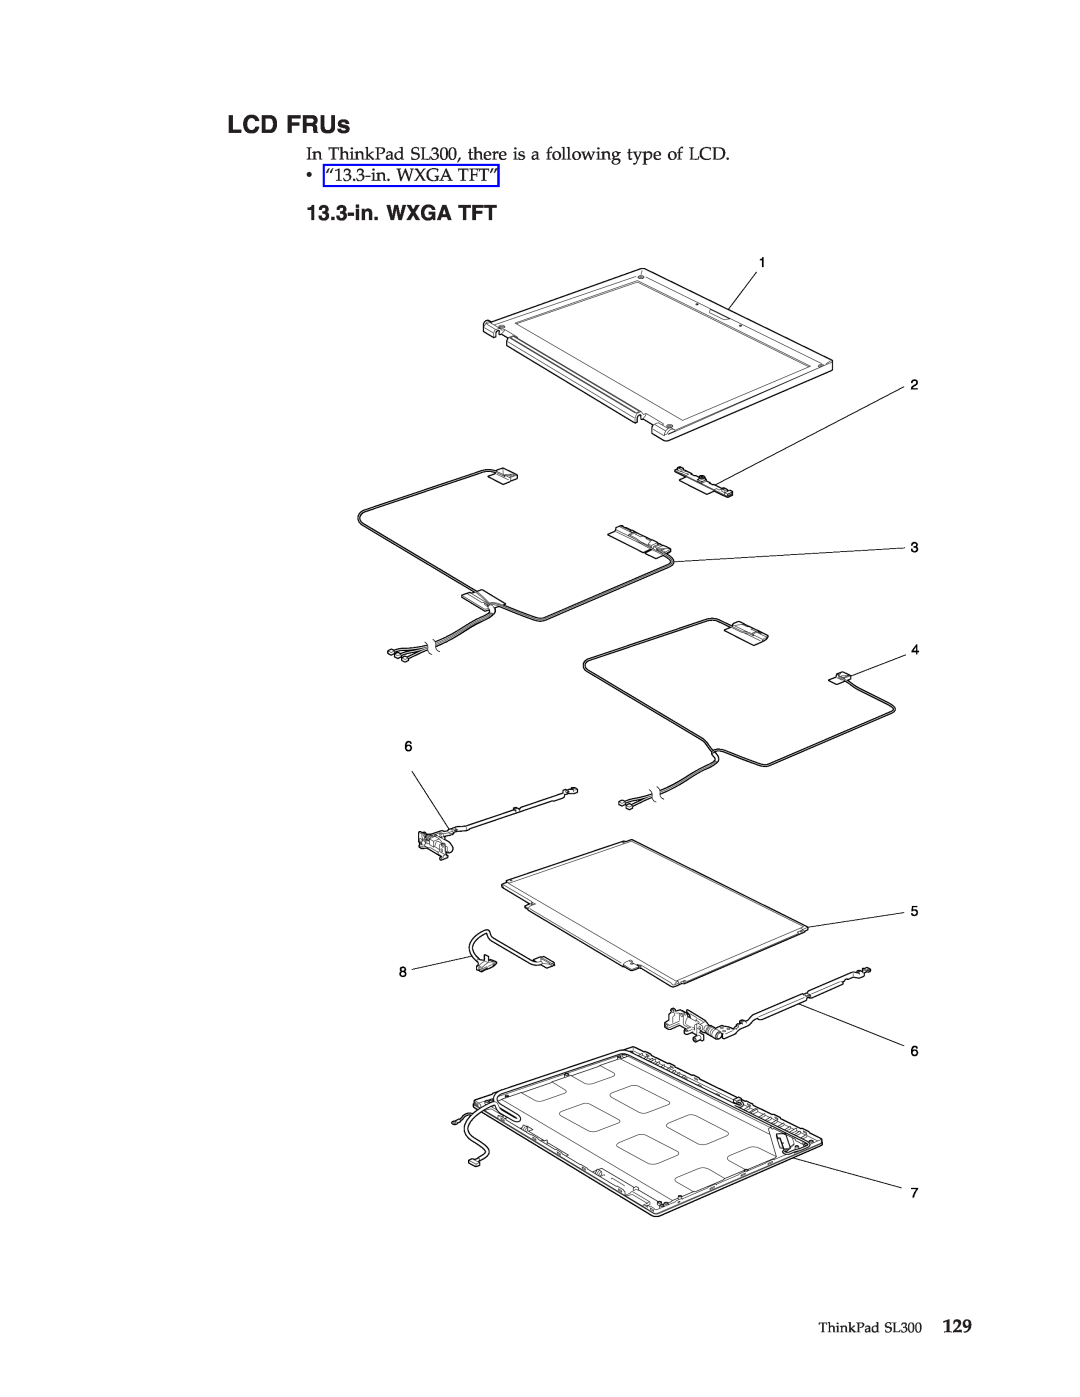 Lenovo manual LCD FRUs, 13.3-in. WXGA TFT, ThinkPad SL300 